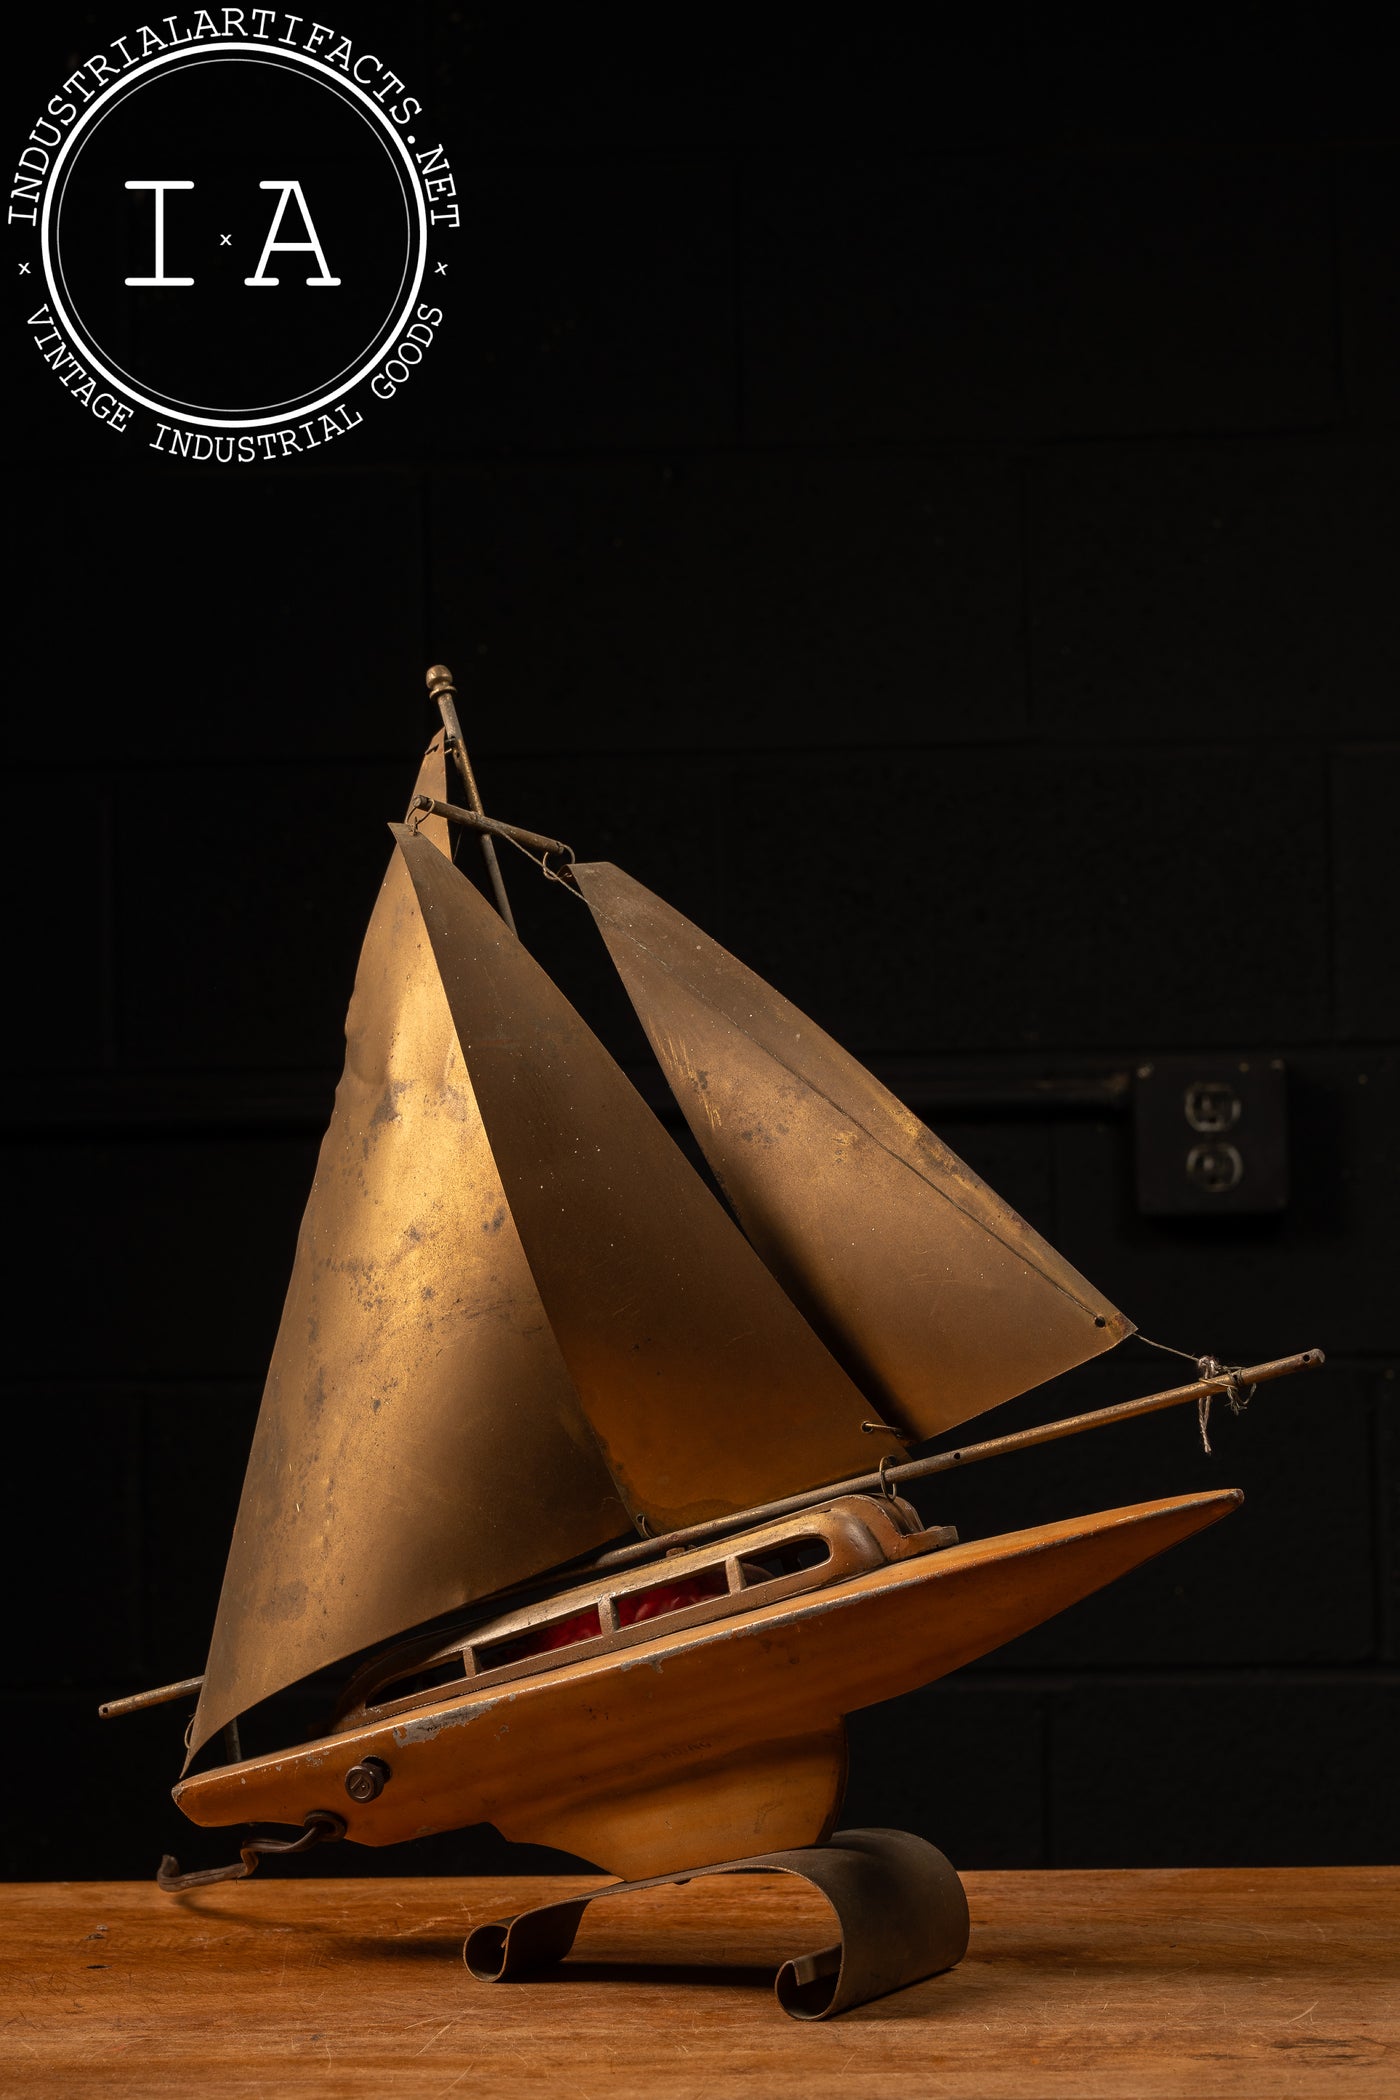 Vintage Sailboat Accent Lamp